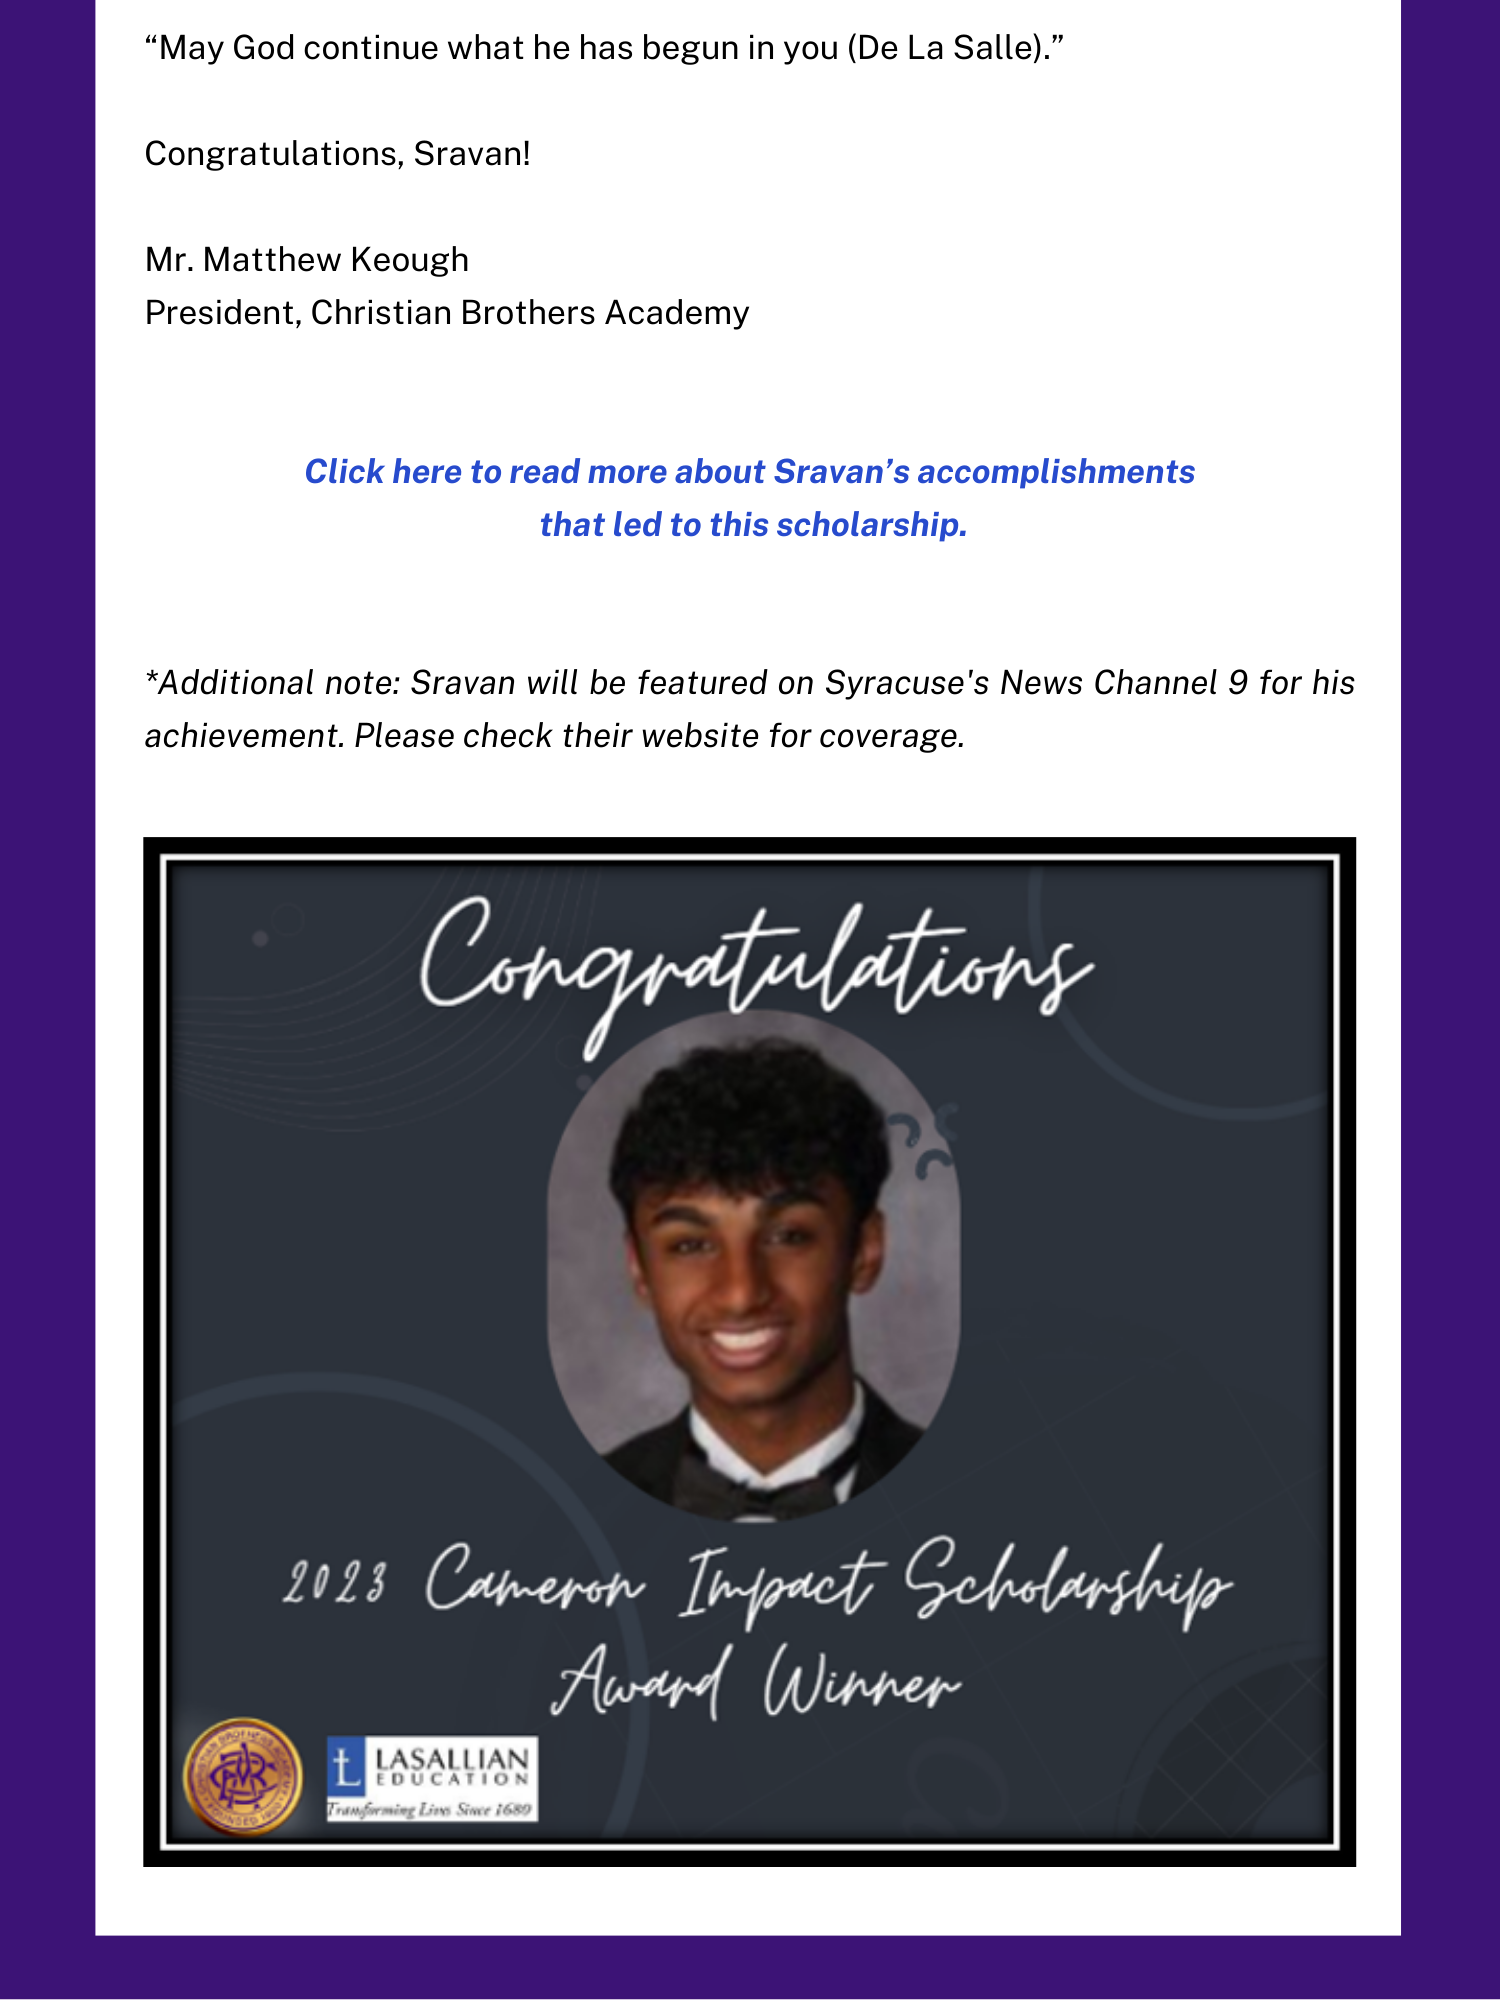 Congratulations to Sravan, Christian Brothers Acadamy student,  for receiving the 2023 Cameron Impact Scholarship Award